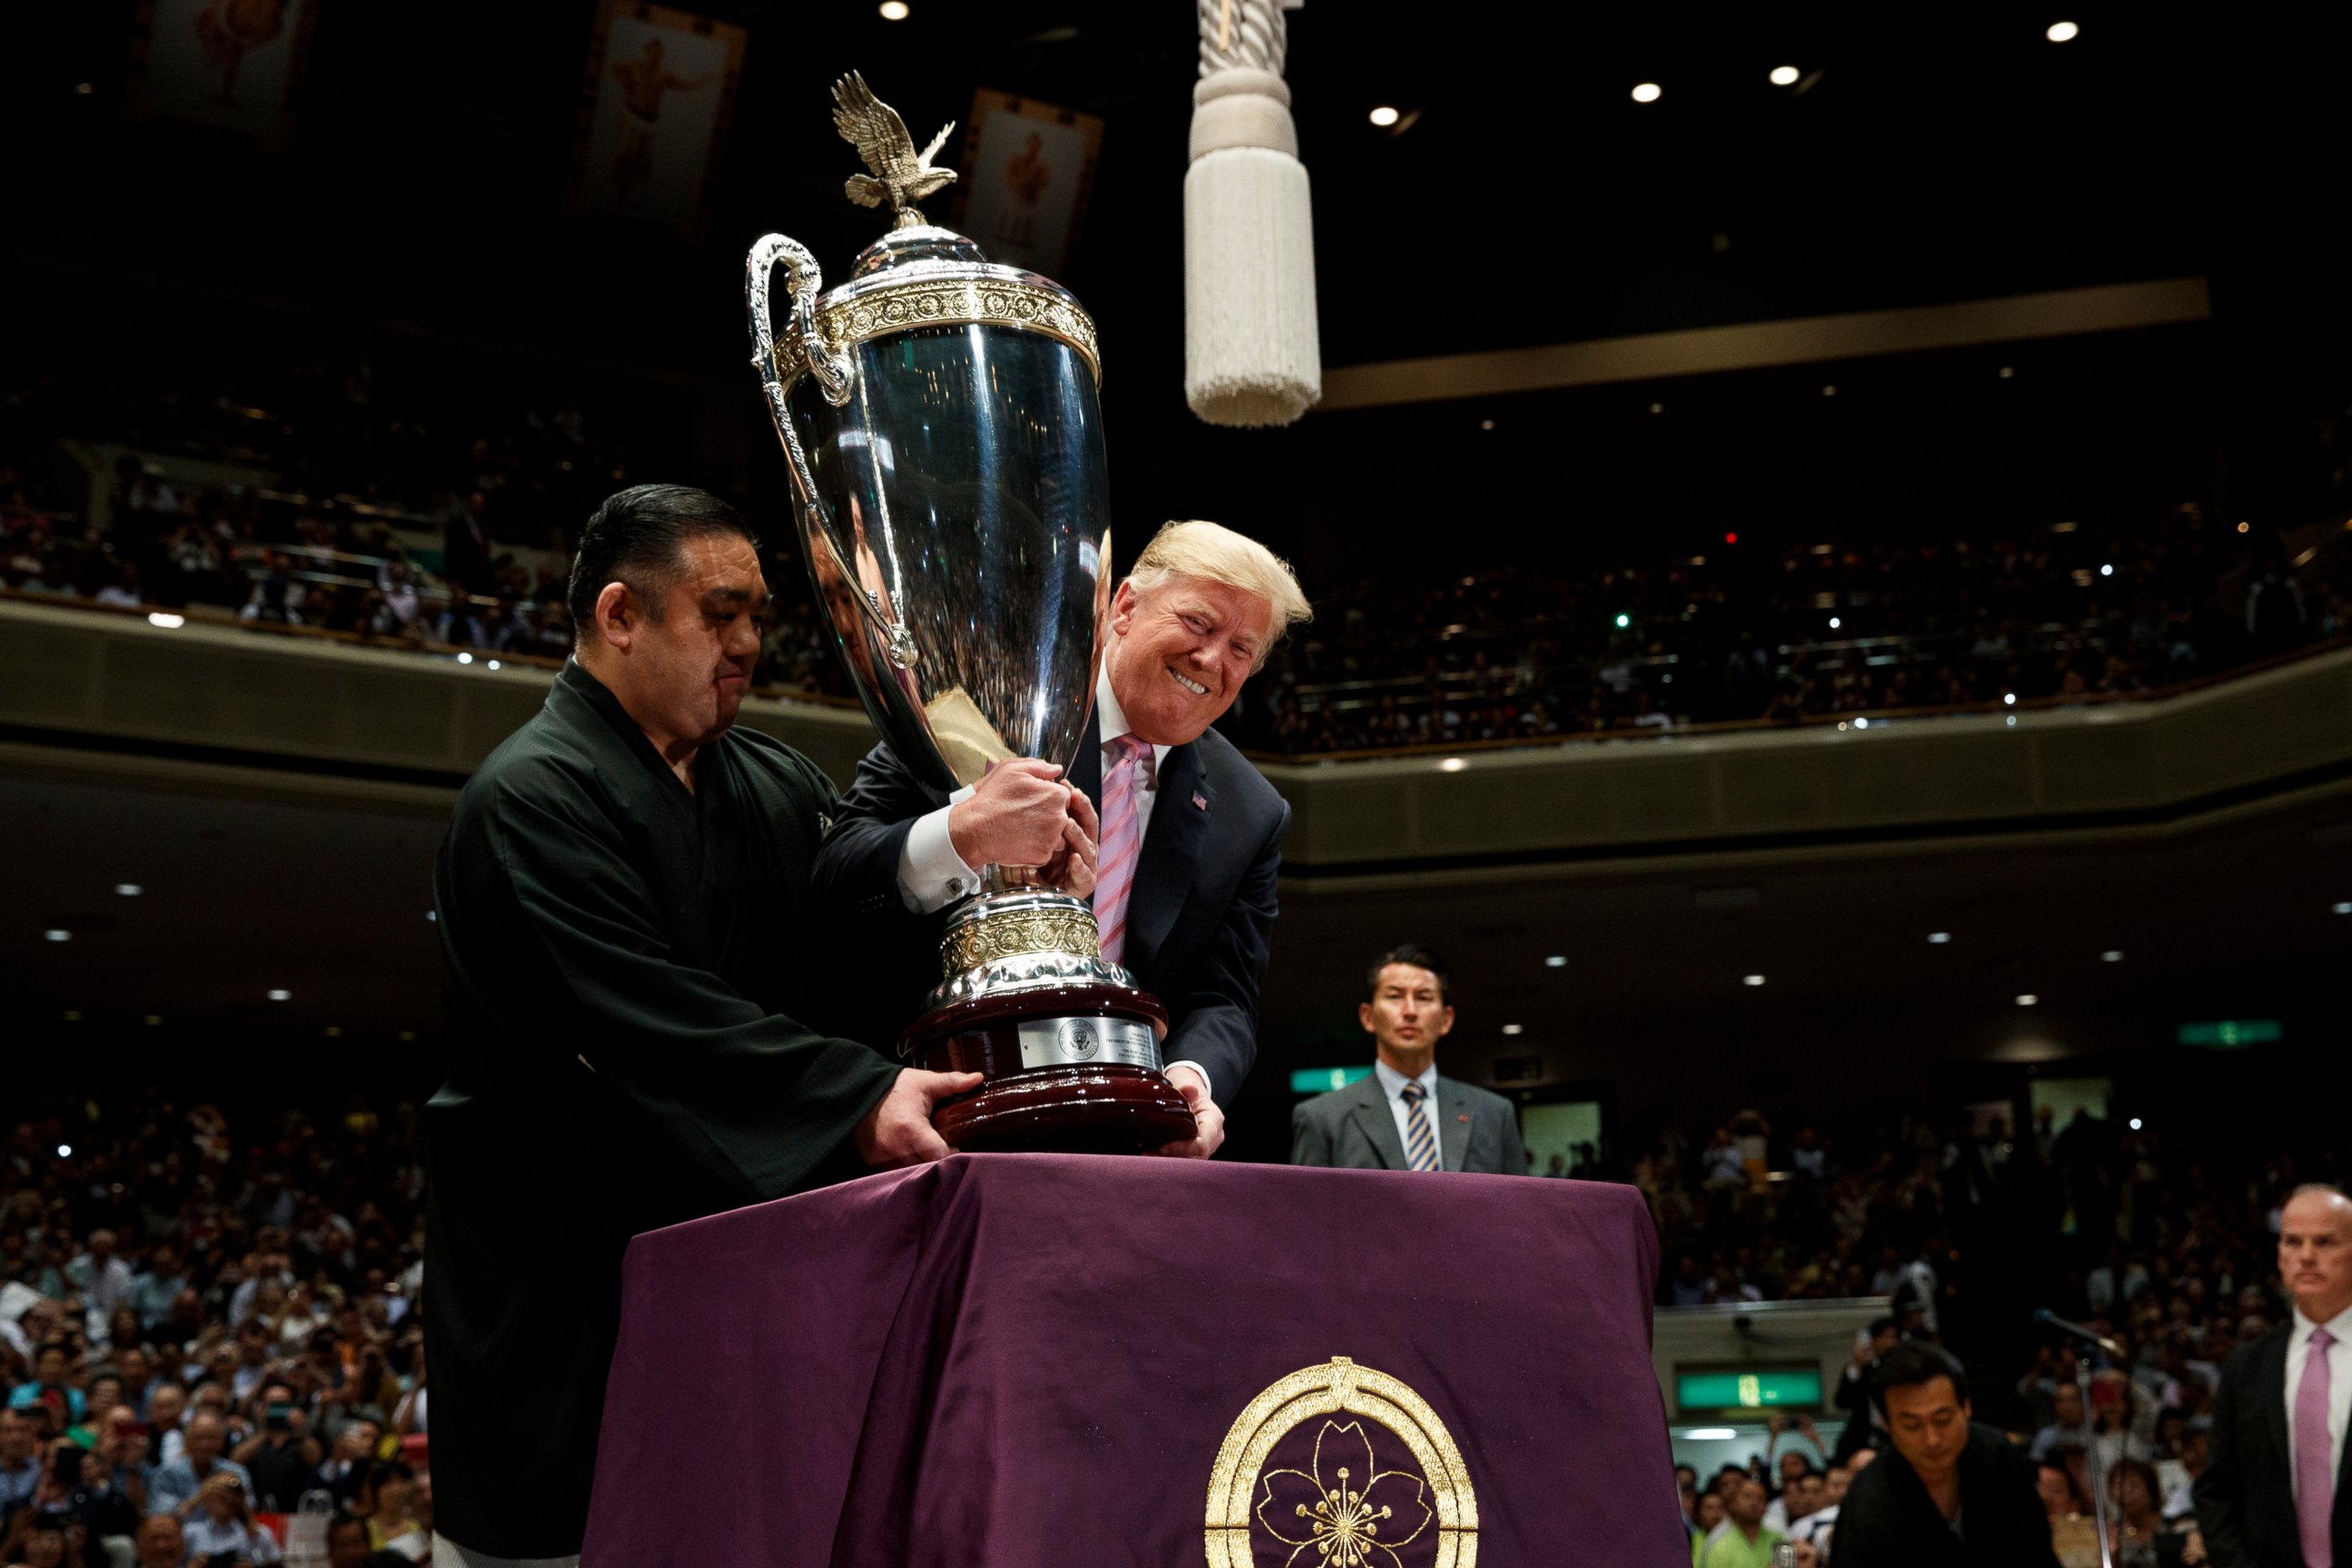 https://s.abcnews.com/images/Politics/trump-trophy-japan-ap-mo-20190526_hpMain.jpg